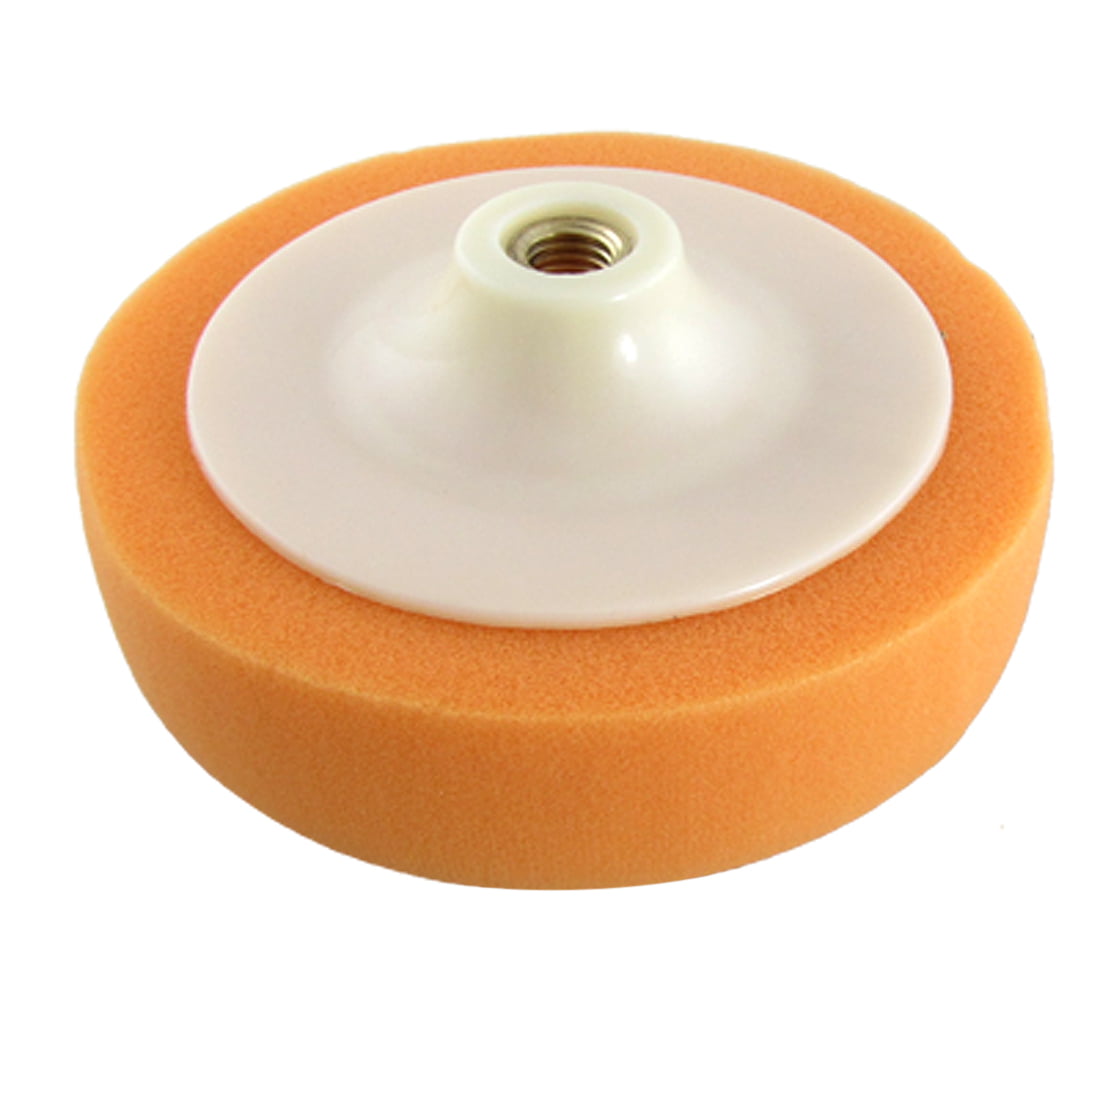 6inch Sponge Polishing Waxing Pad Wheel Orange For Car Polisher Buffer Machine